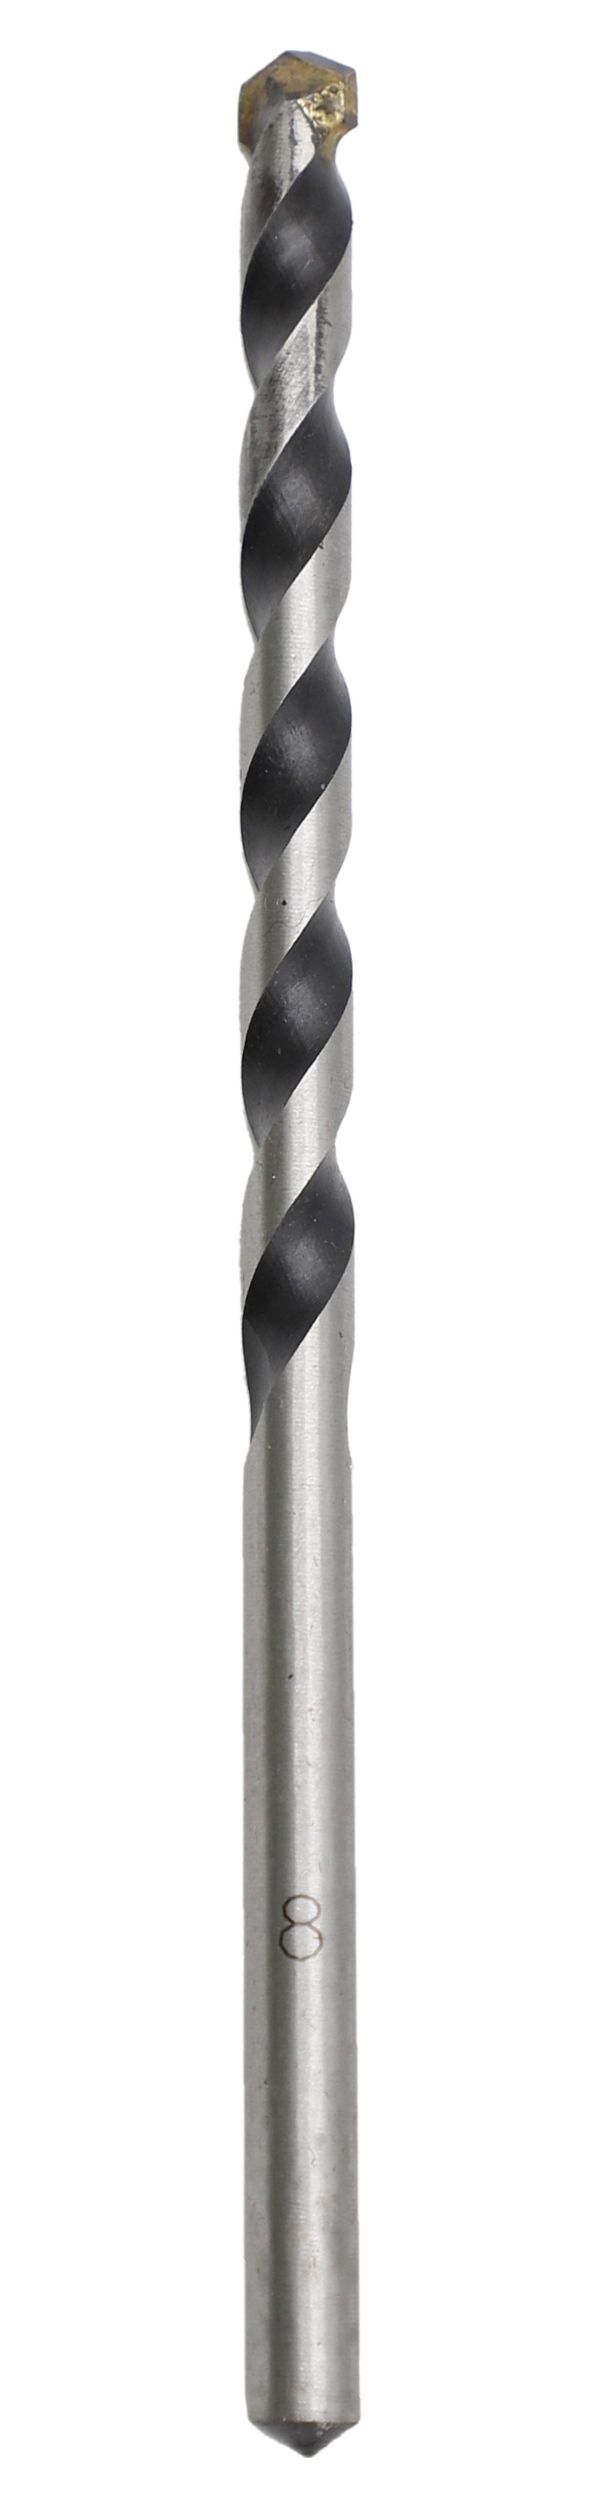 Masonry Drill Bit 12mm x 160mm Carbide Tip Rotary Hammer Bit 9mm Round  Shank for Impact Drill 